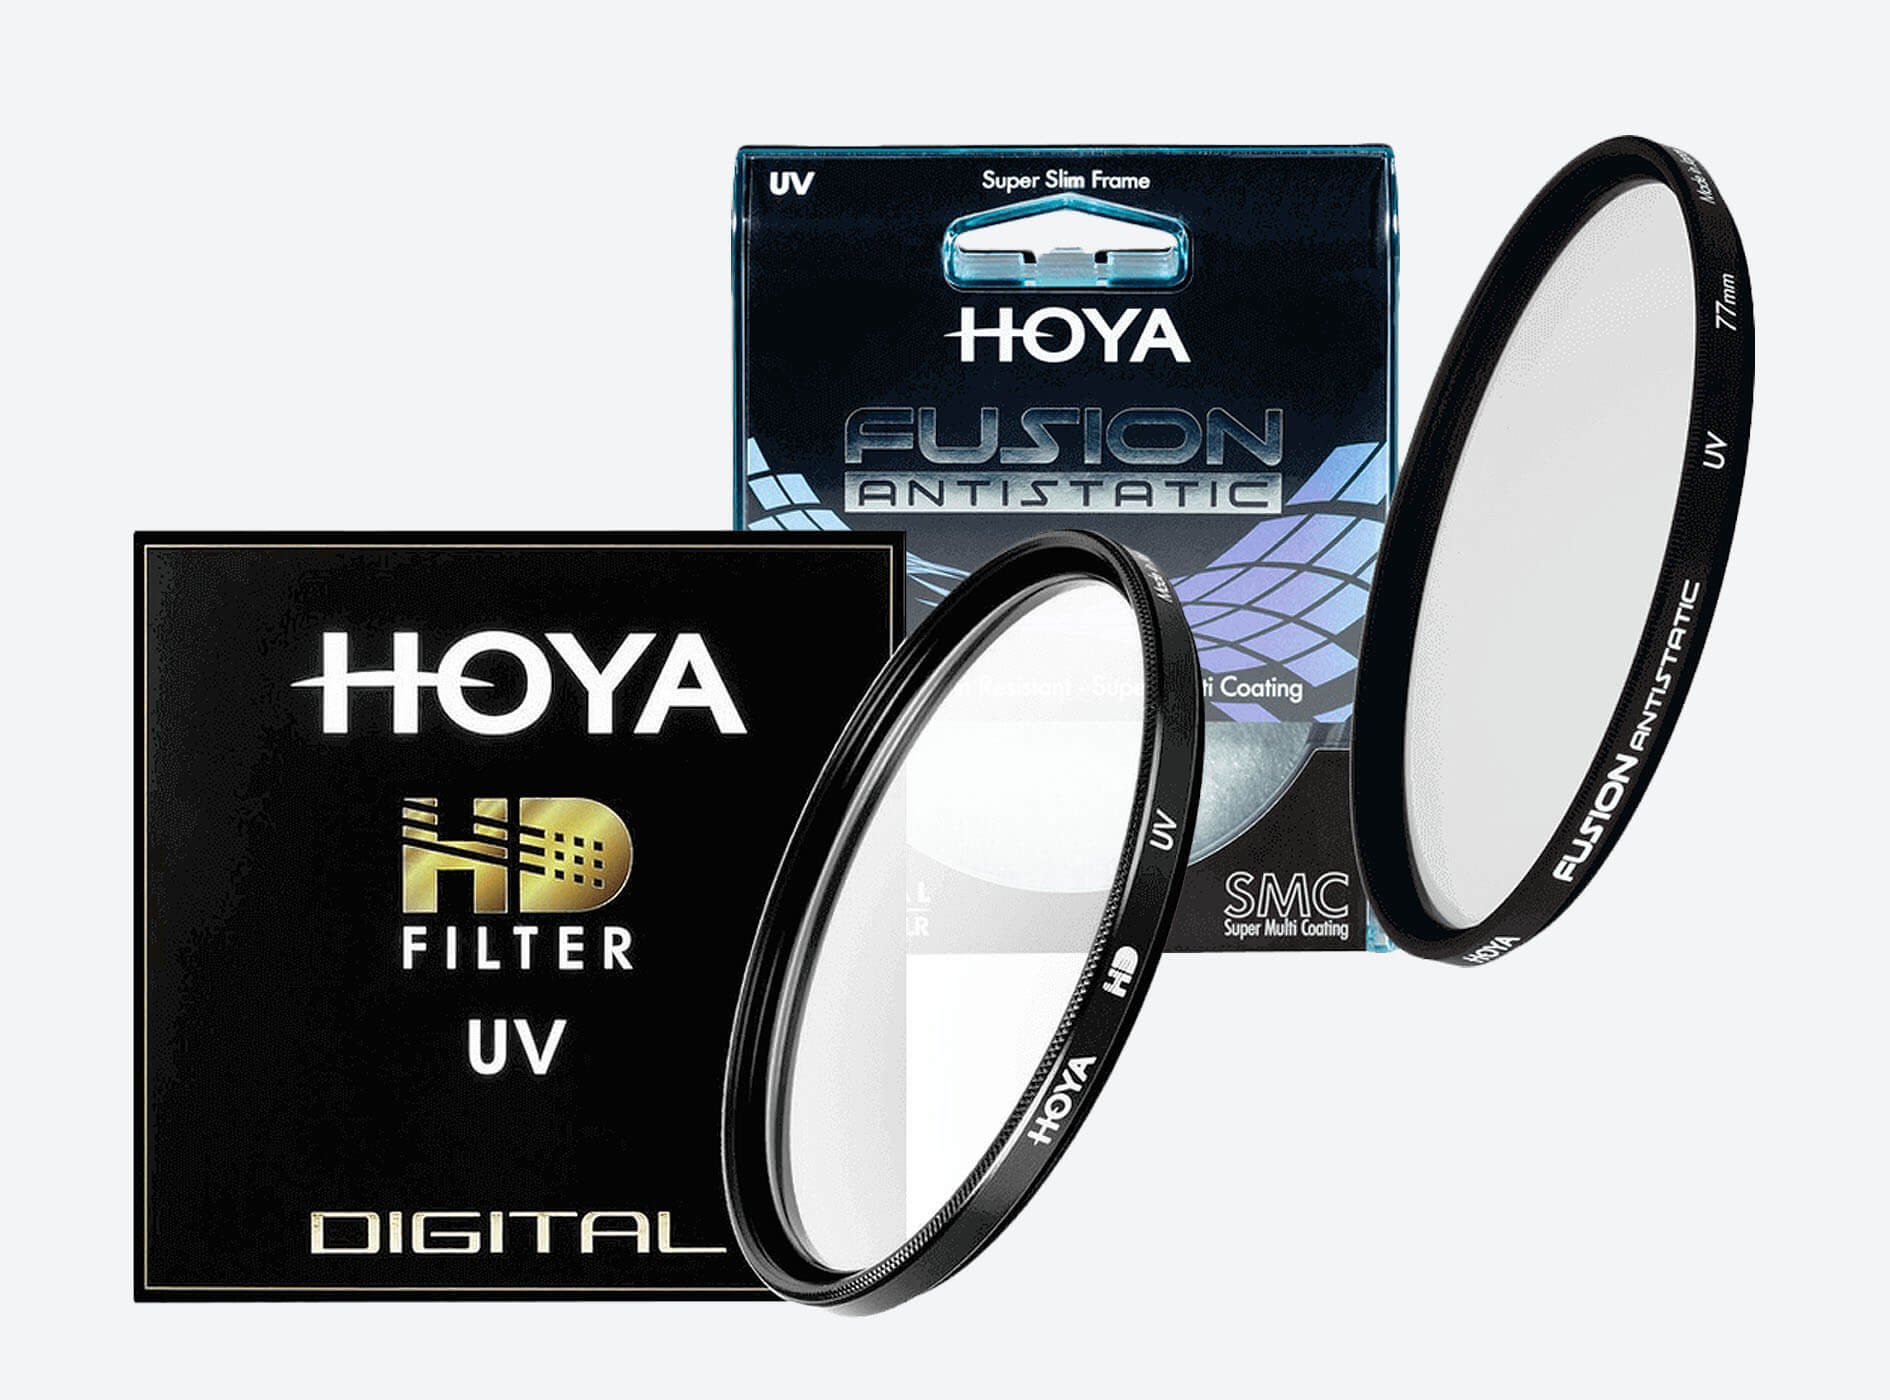 Hoya photographic filters